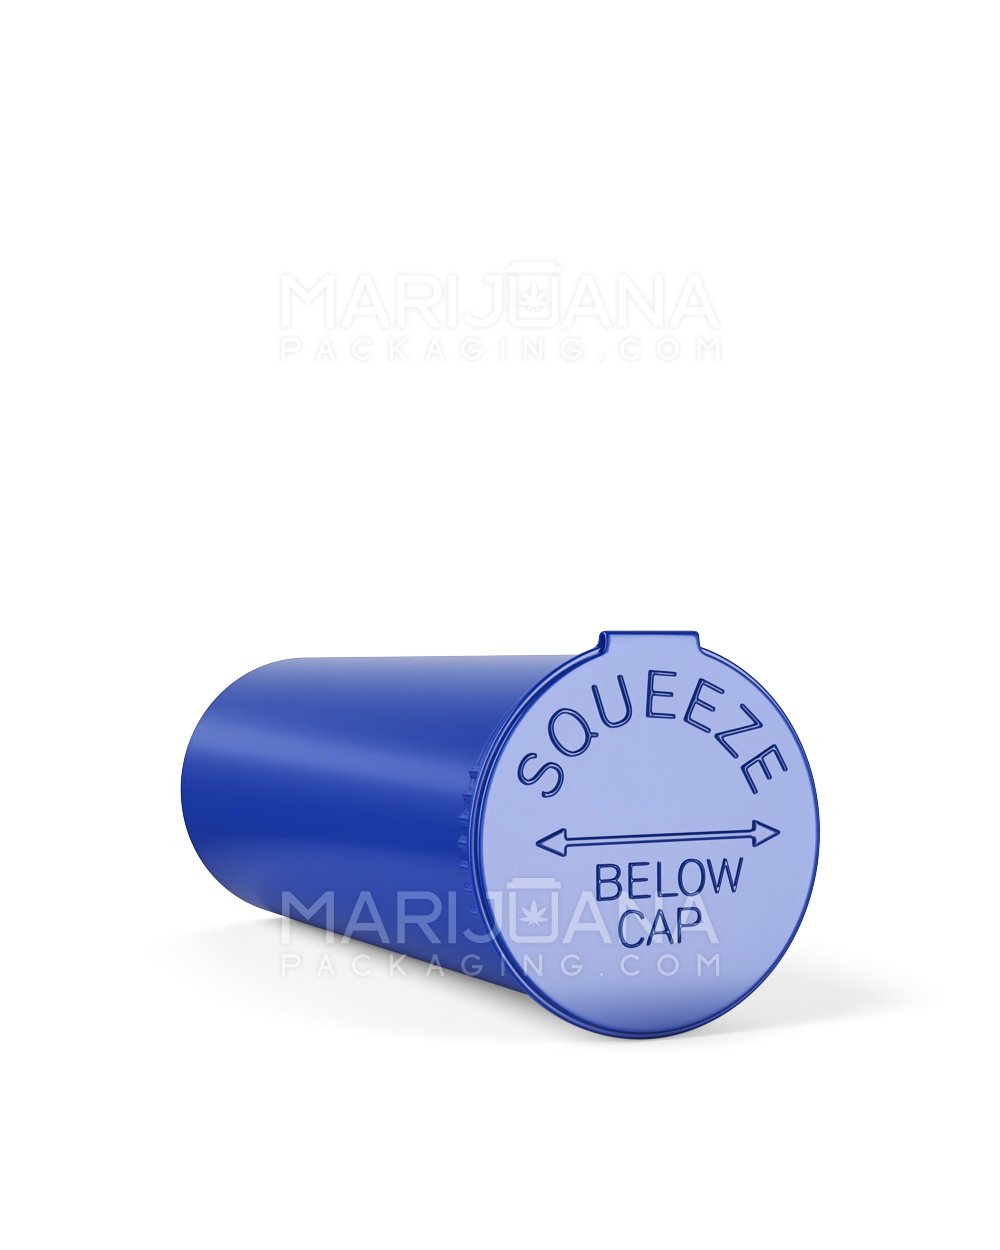 Child Resistant | Opaque Blueberry Pop Top Bottles | 60dr - 14g - 75 Count - 3